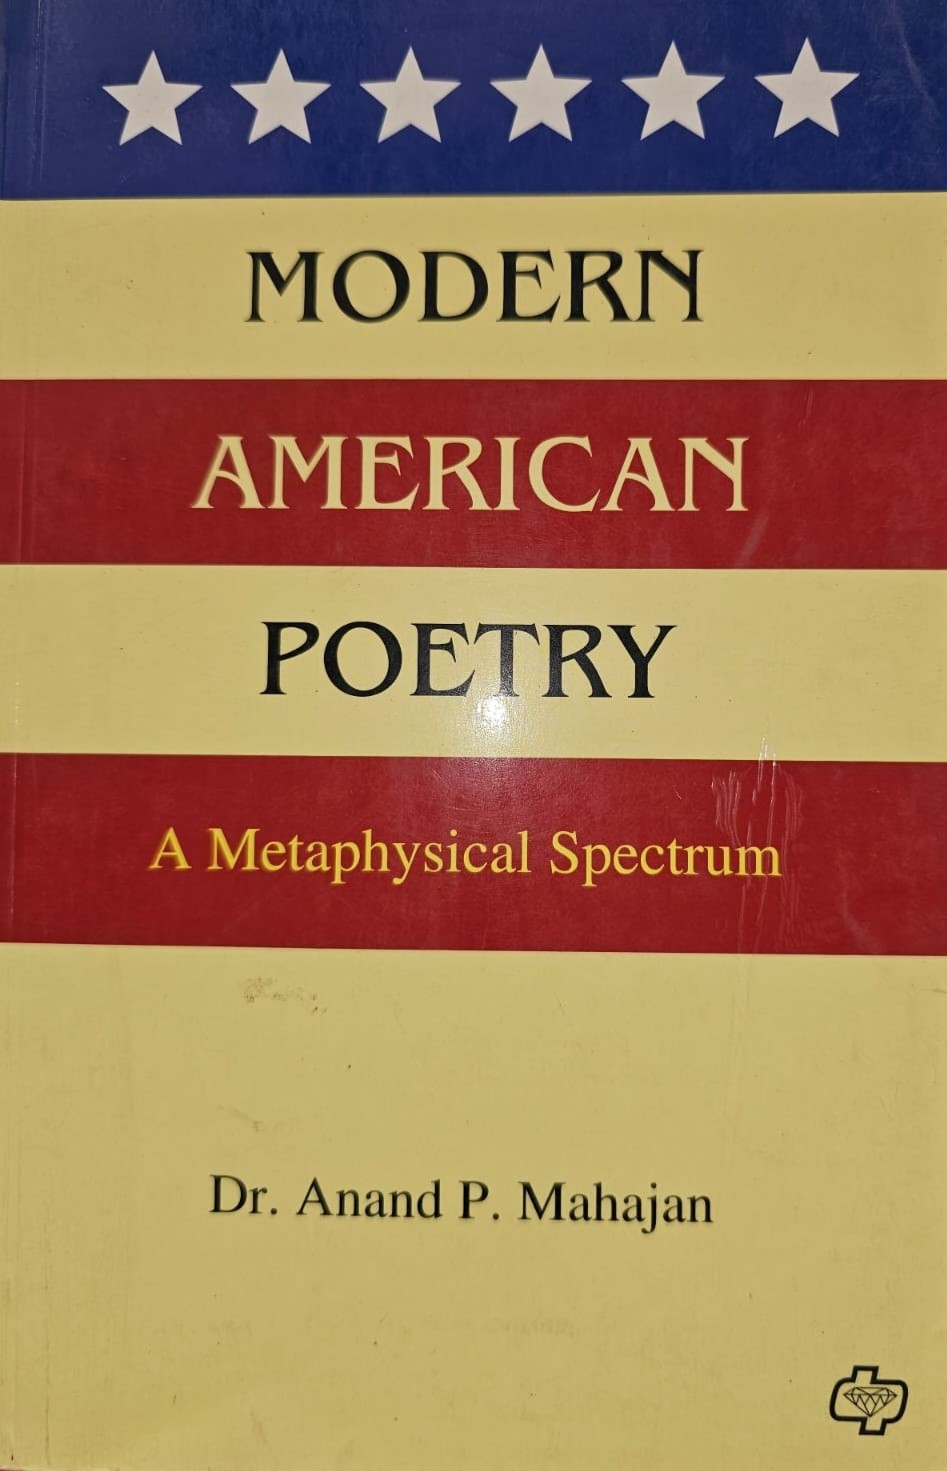 MODERN AMERICAN POETRY A Metaphysical Spectrum